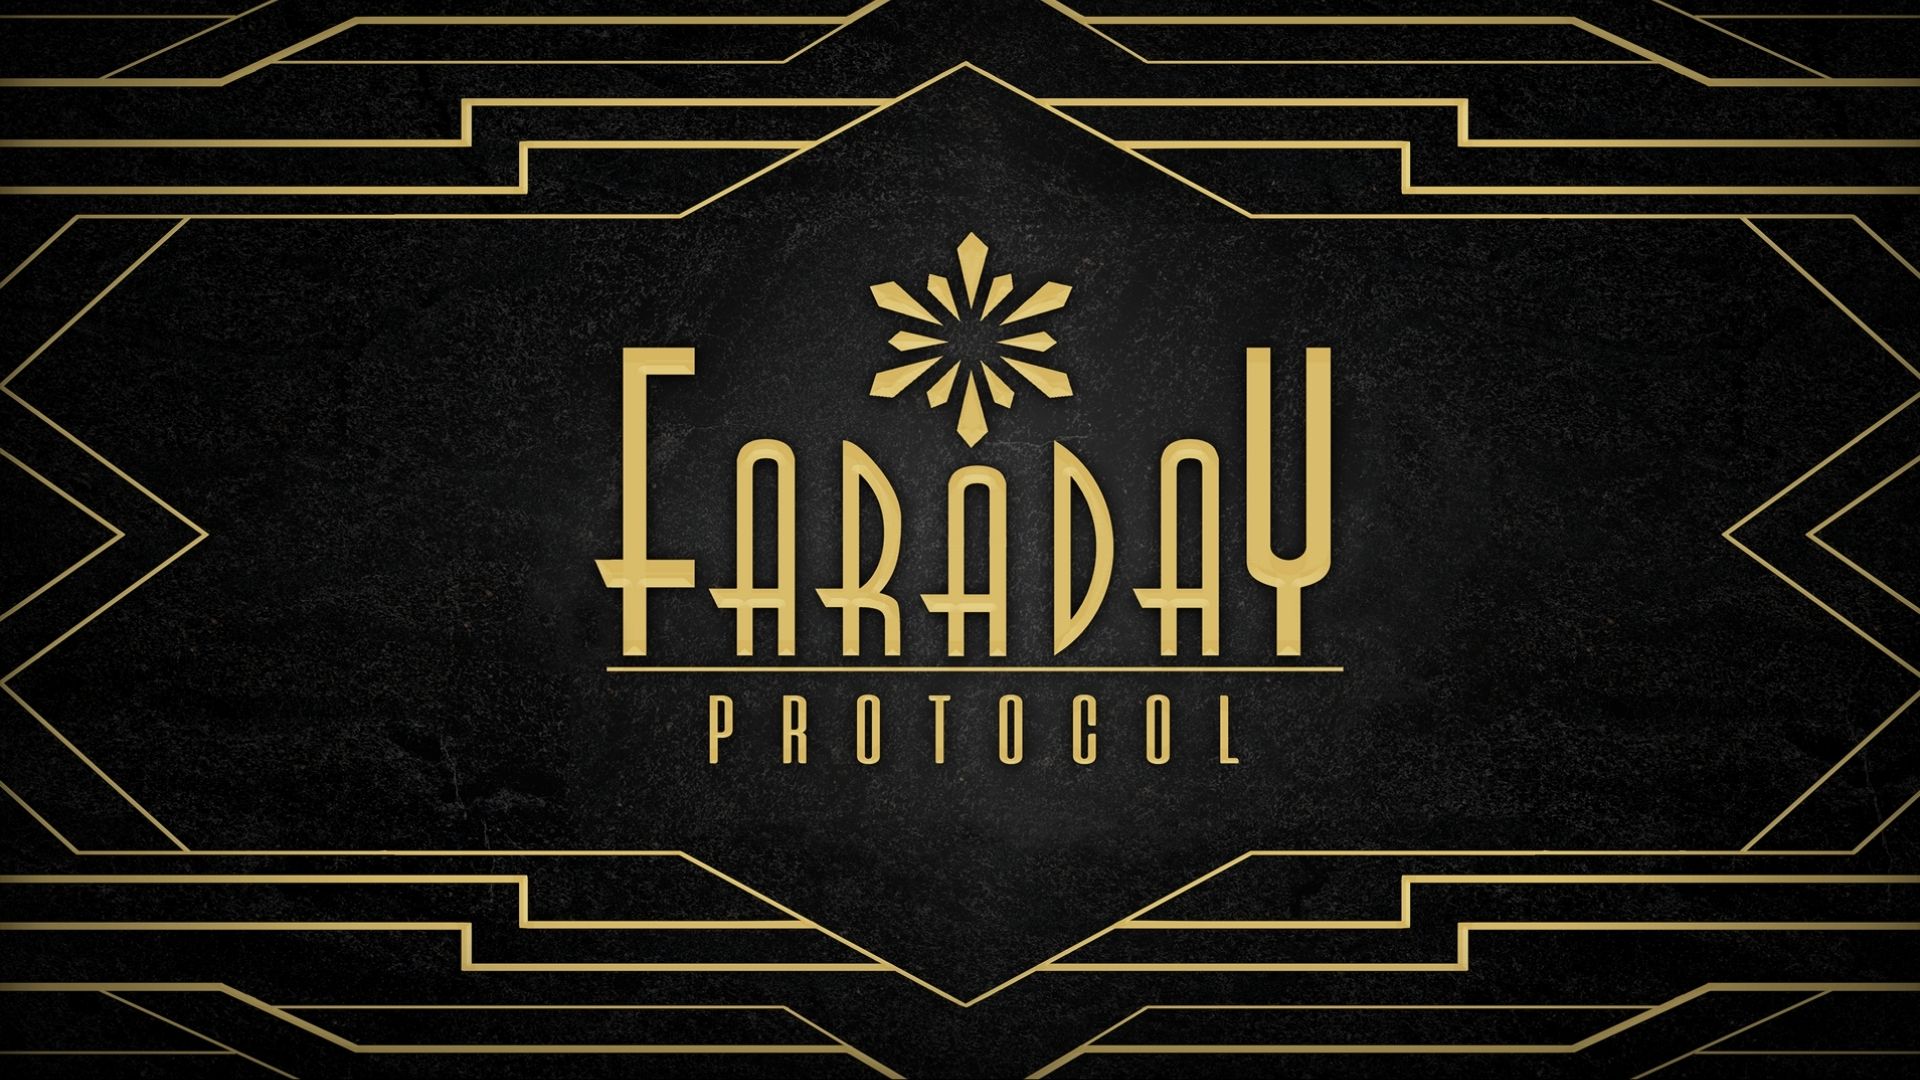 faraday protocol header